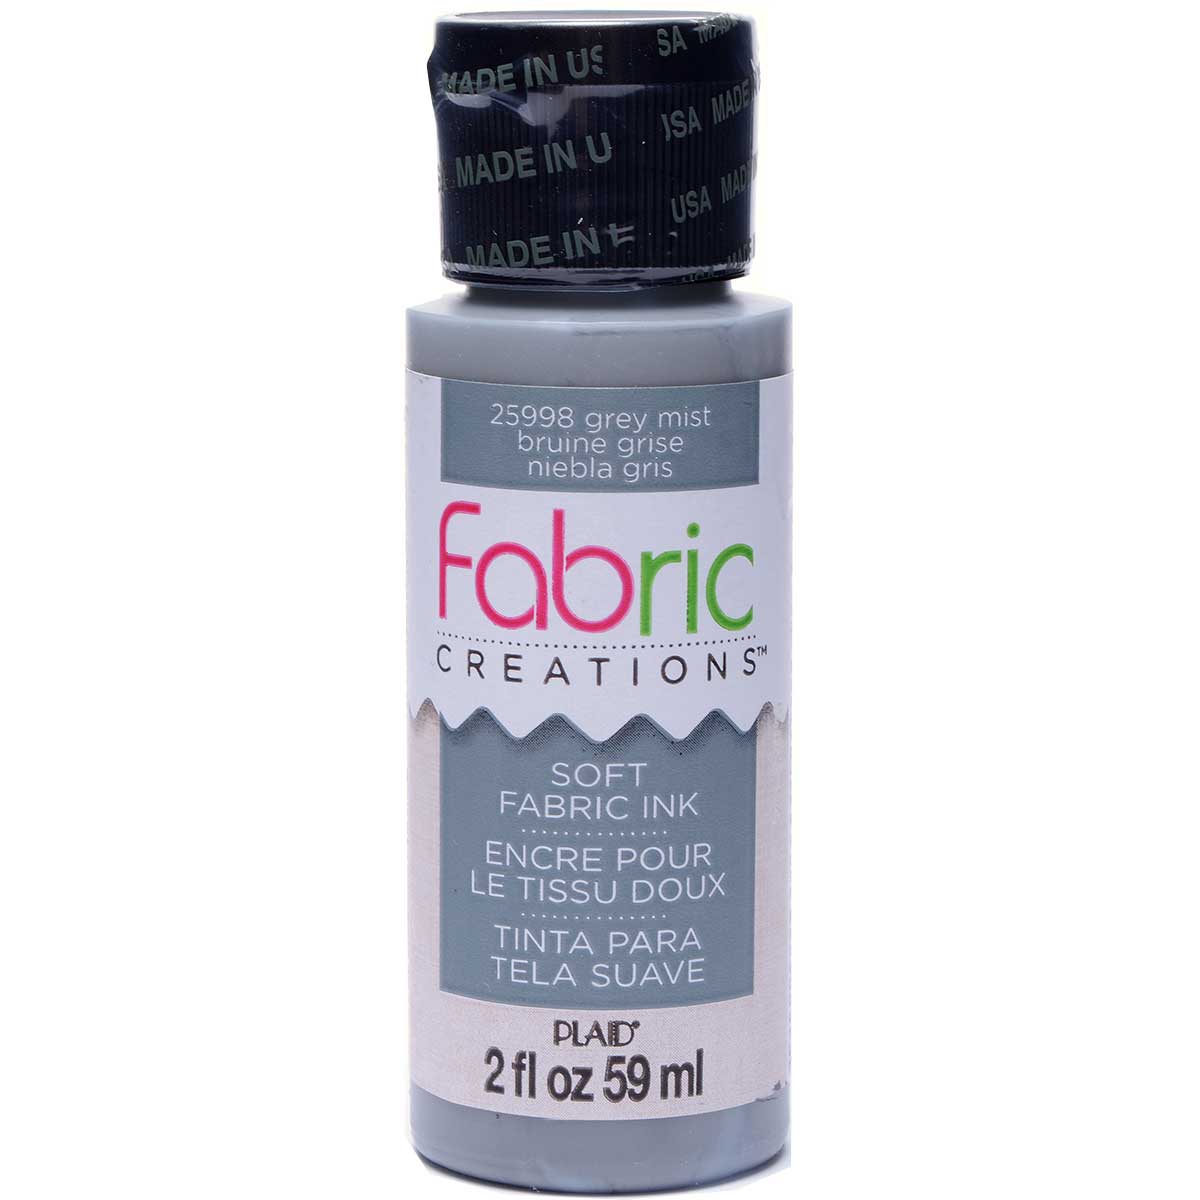 Fabric Creations™ Soft Fabric Inks - Grey Mist, 2 oz. - 25998